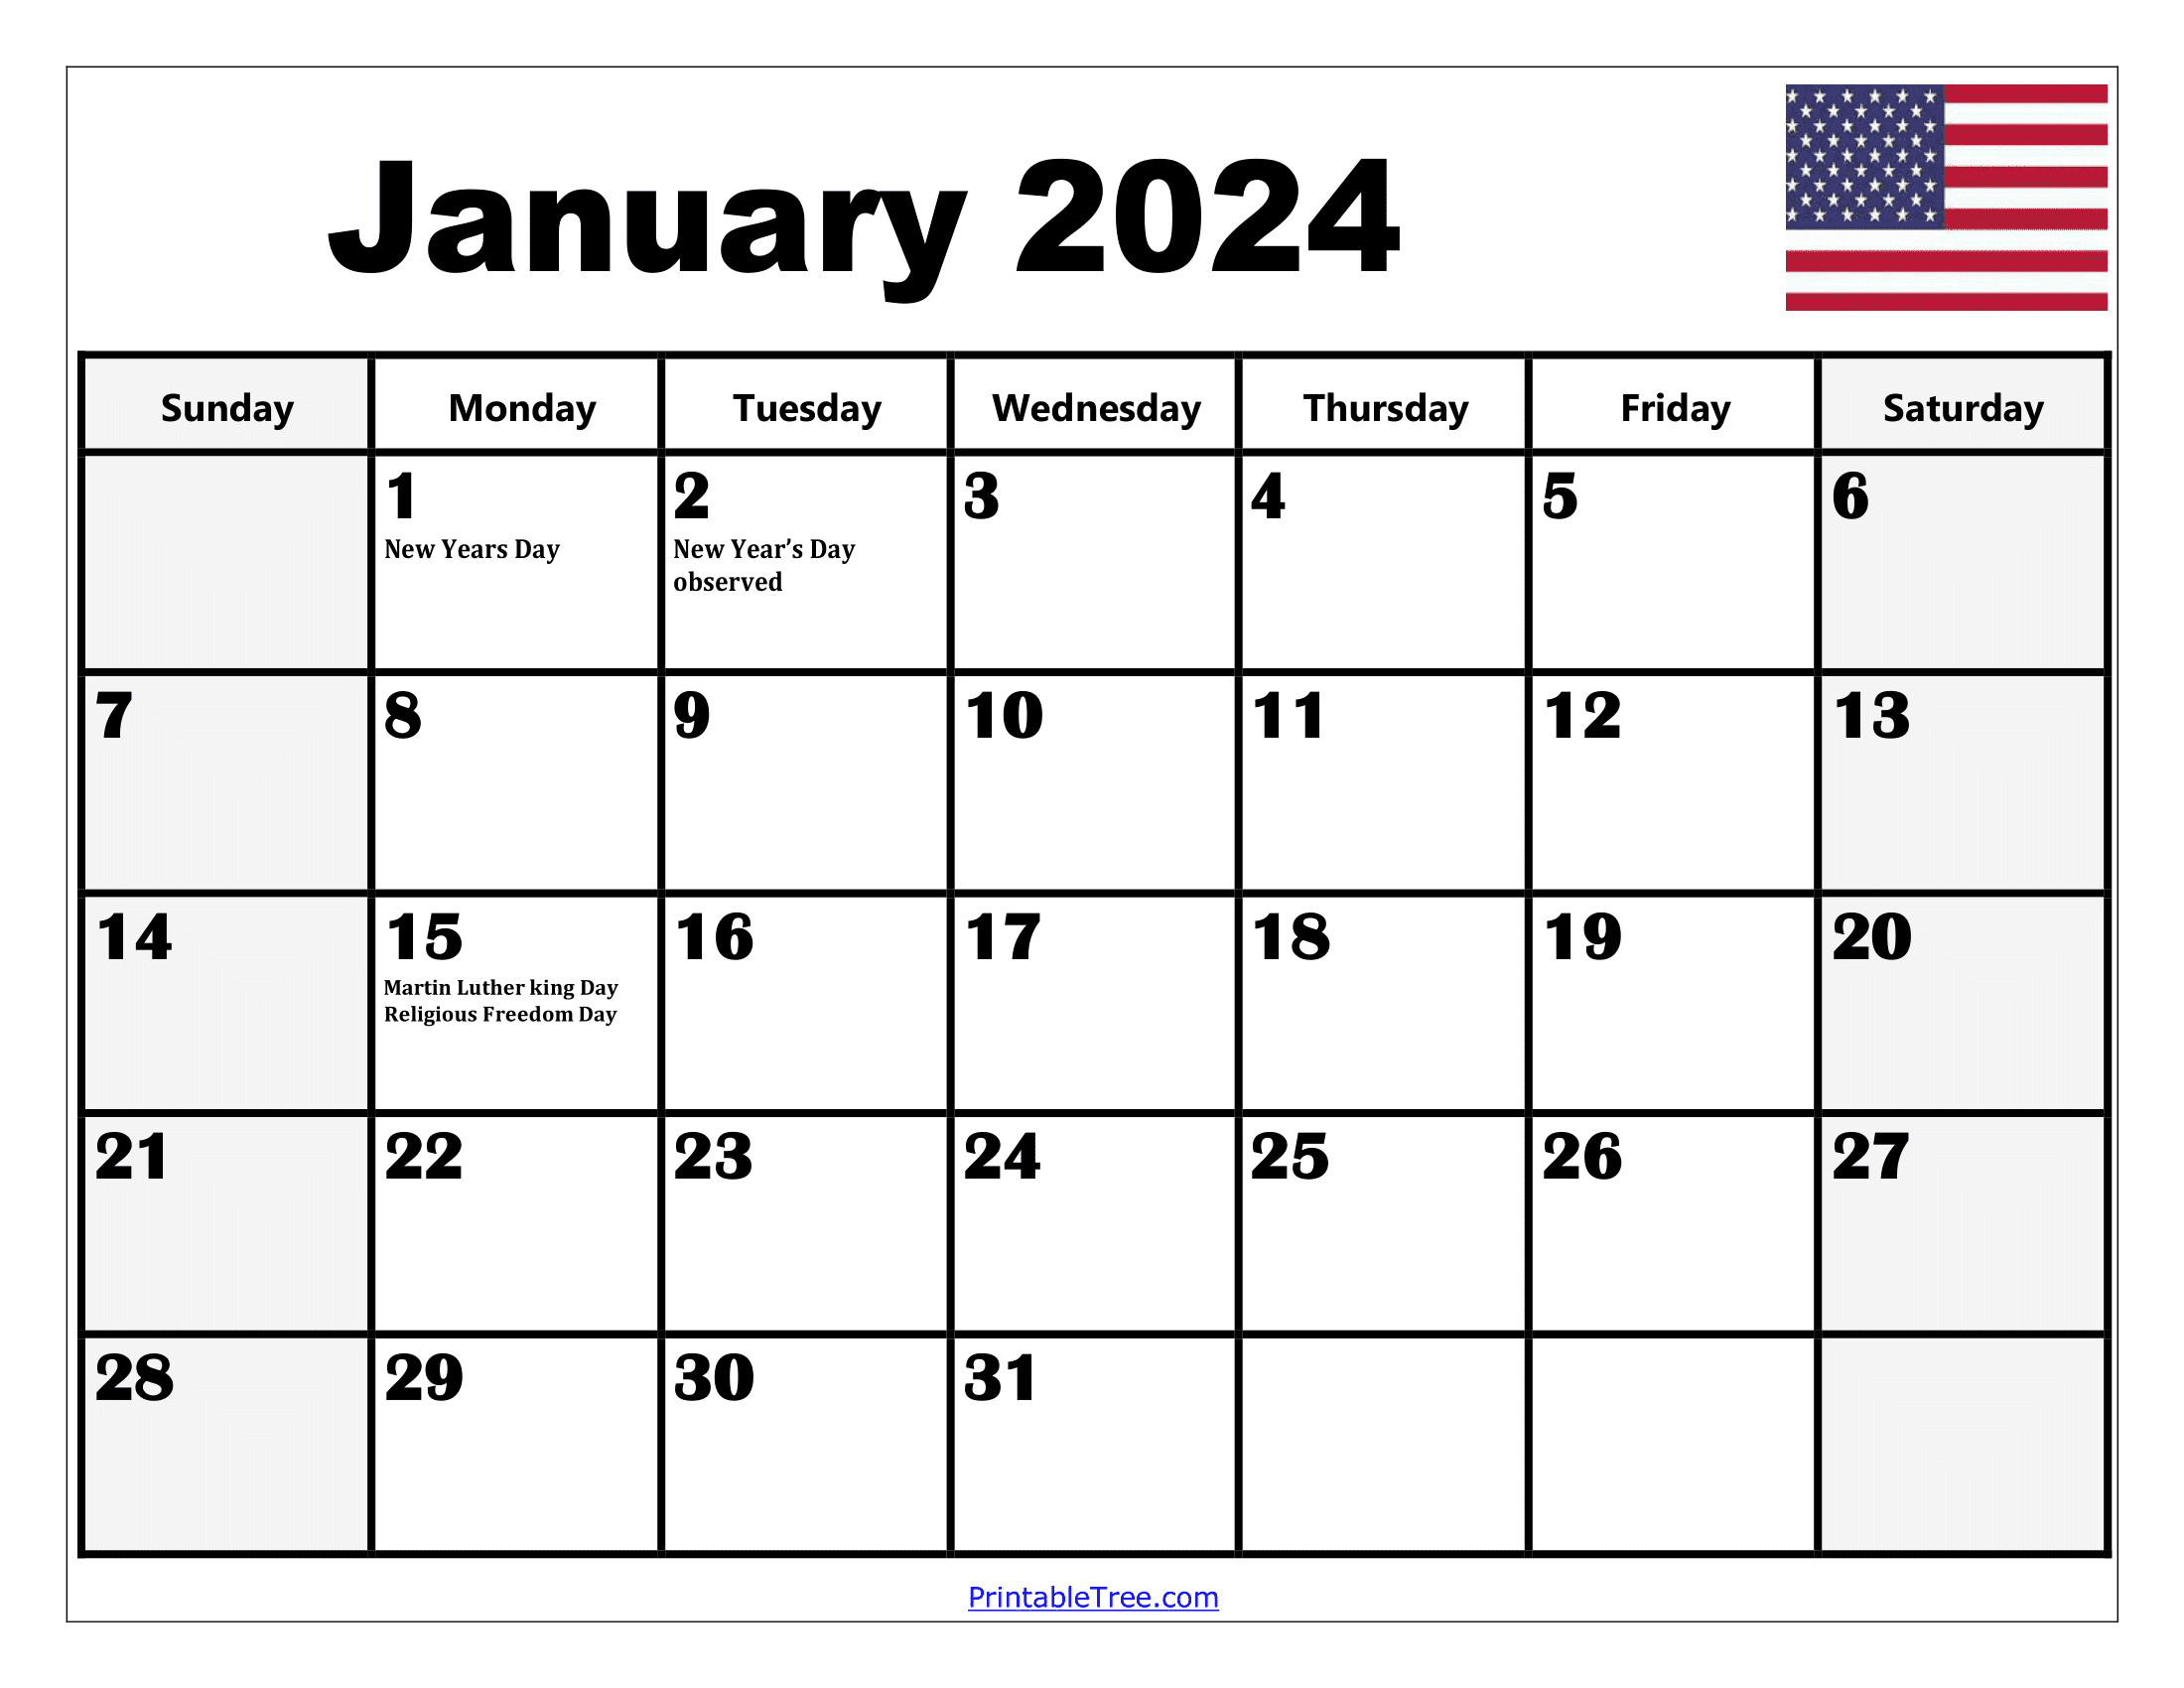 January 2024 Calendar Printable Pdf Template With Holidays for January 2024 Calendar With Holidays Printable Free